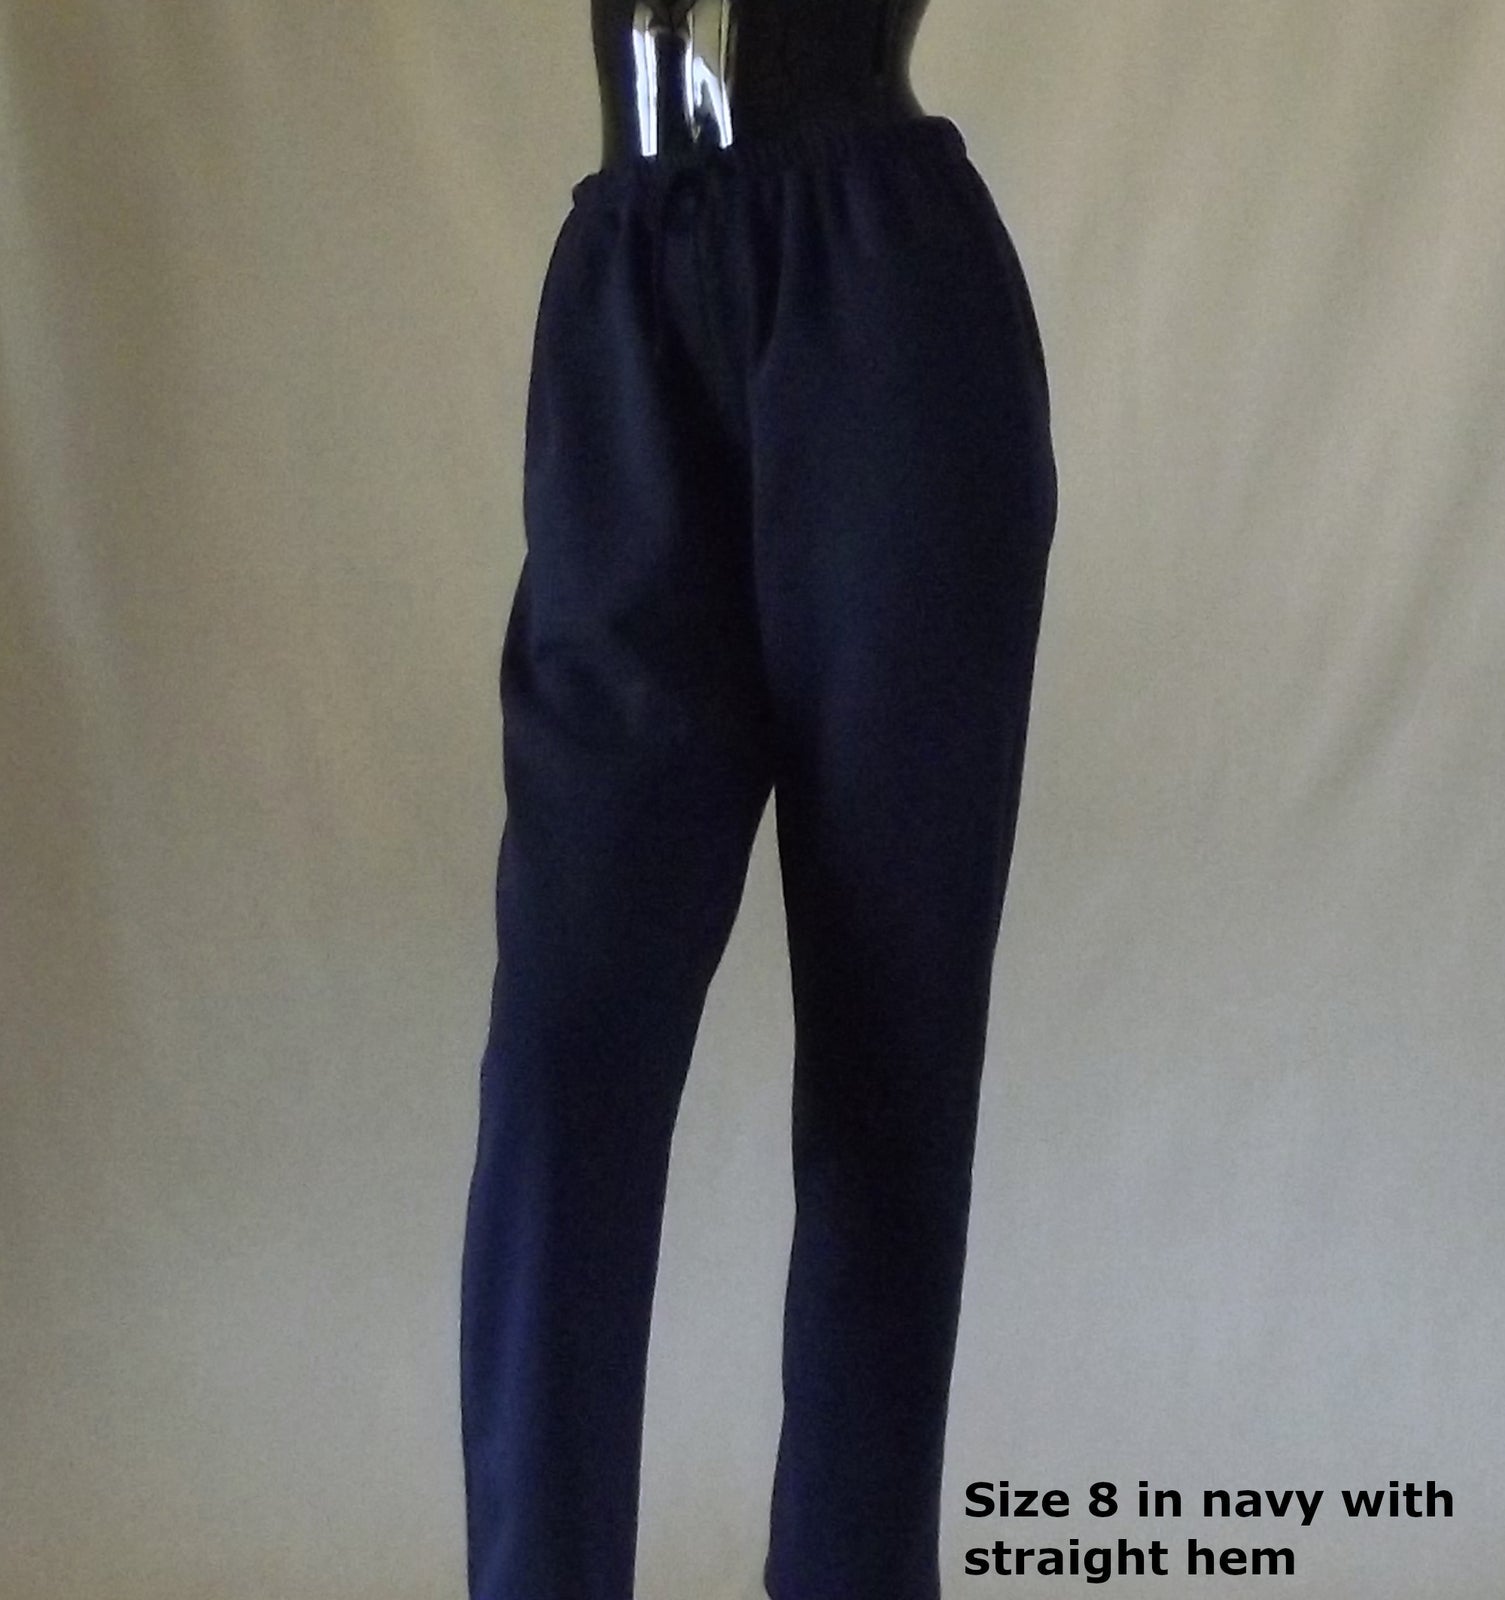 Super warm fleecy pants with straight hem or rib